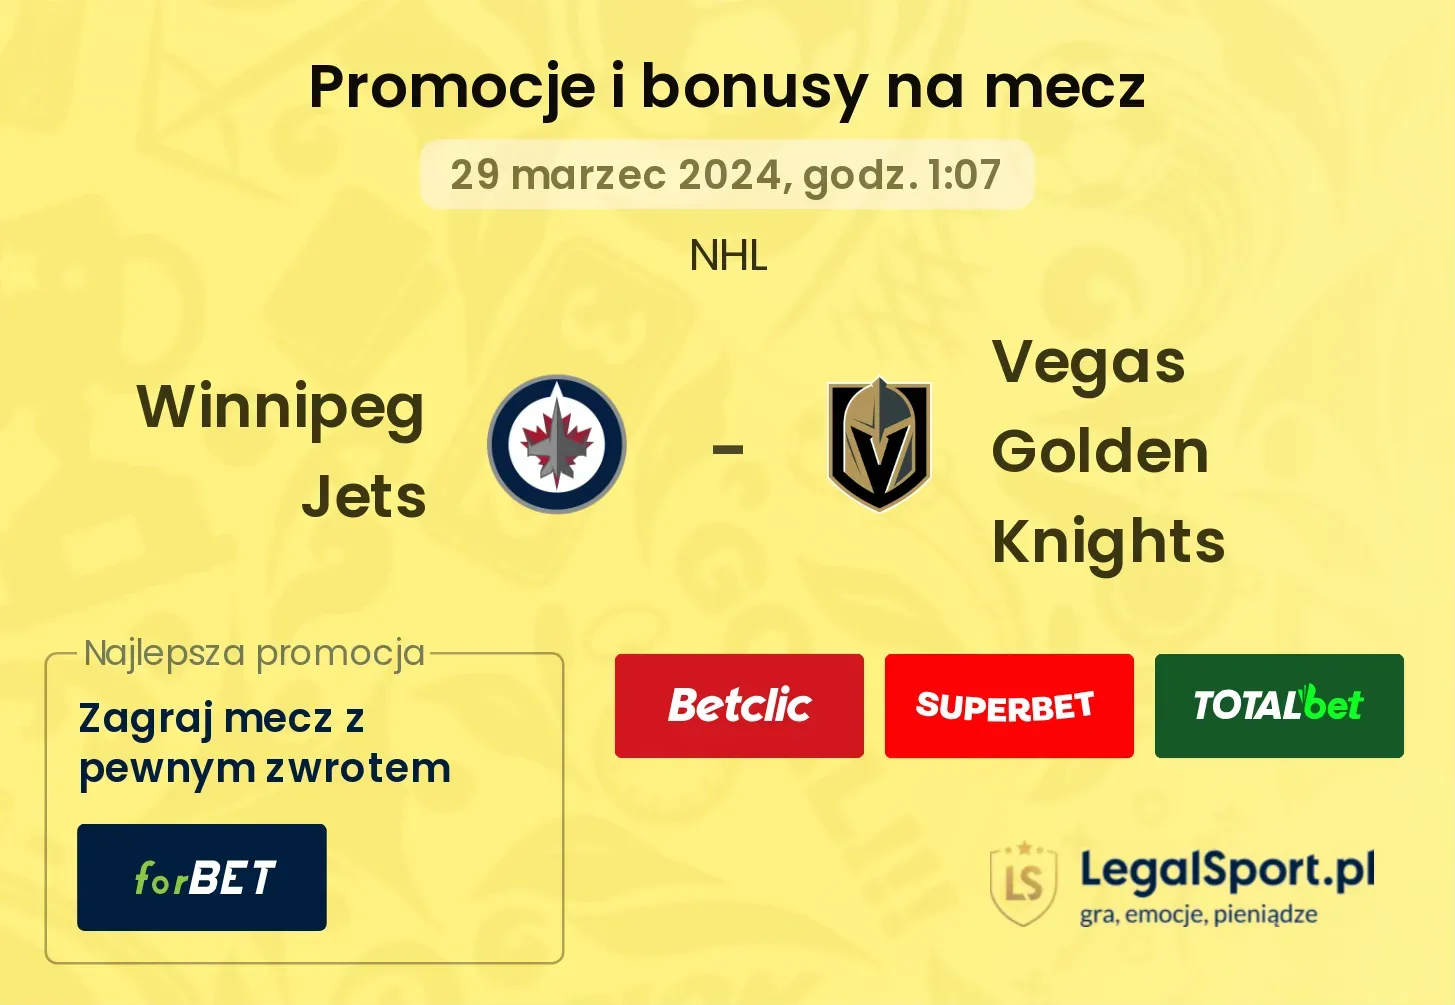 Winnipeg Jets - Vegas Golden Knights $s